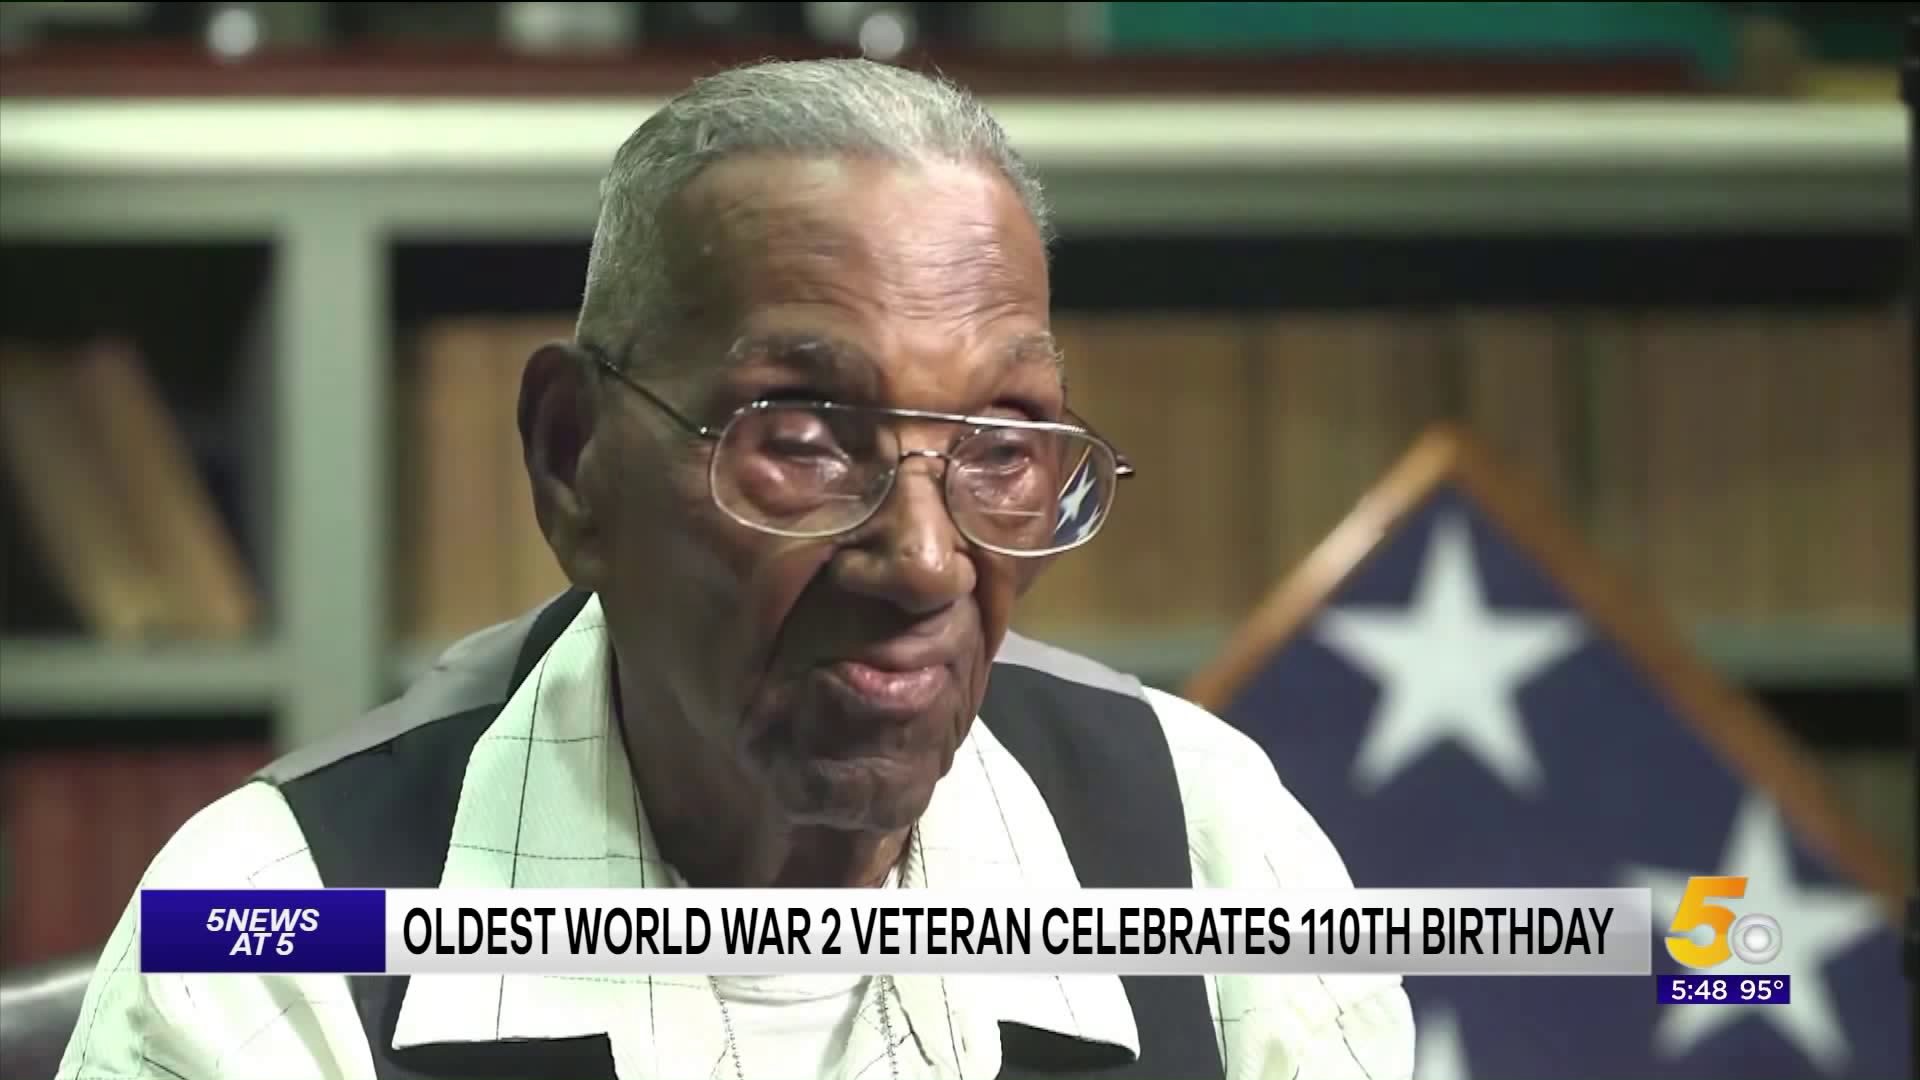 Man Believed To Be Oldest Living American World War II Veteran Celebrates His 110th Birthday